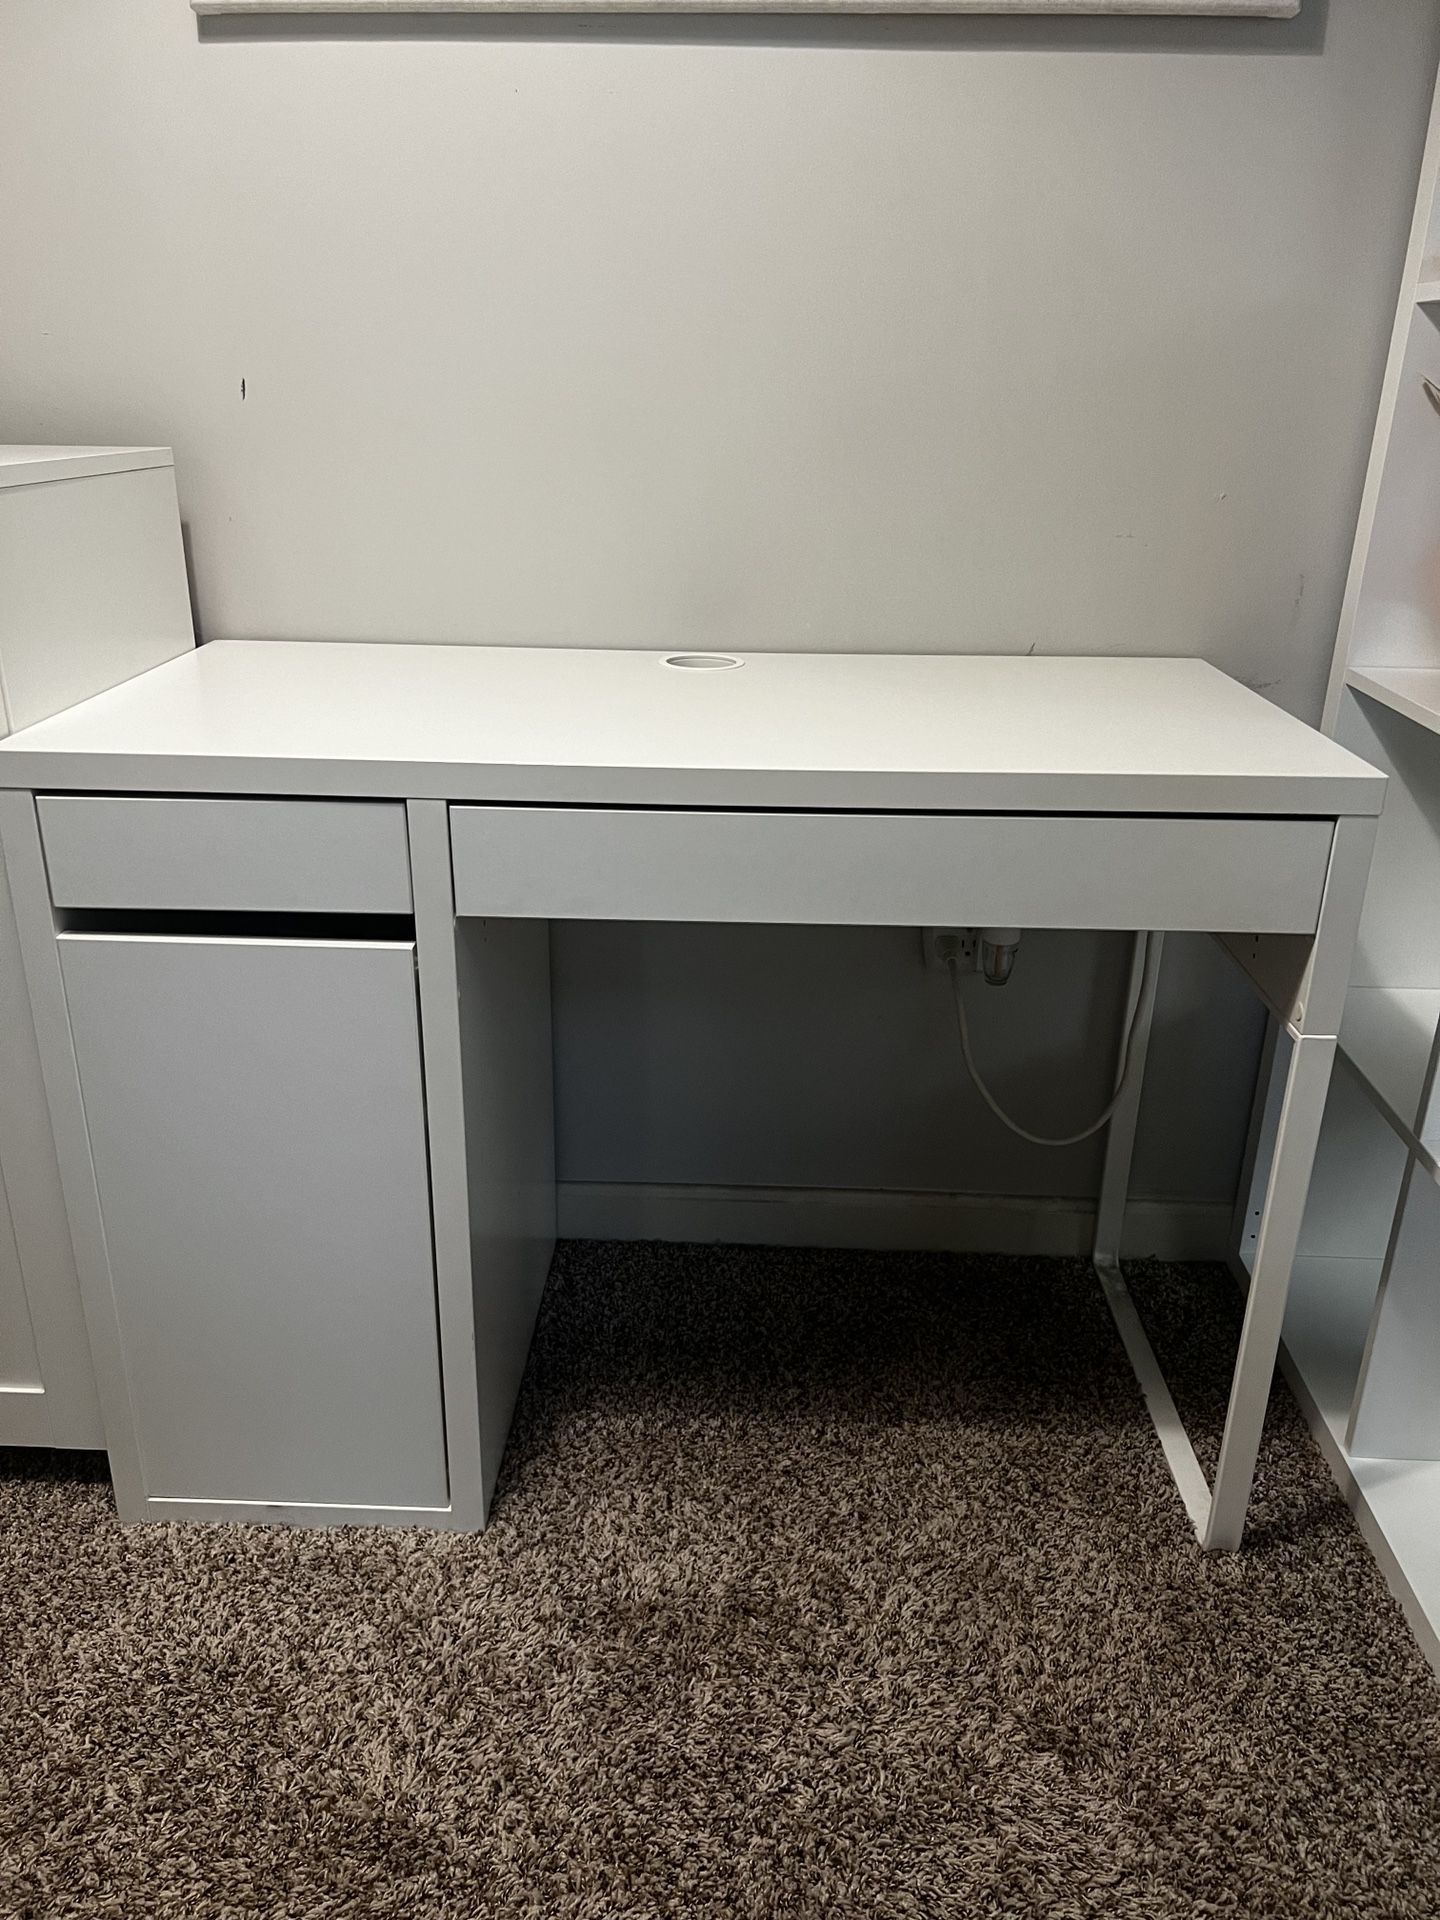 IKEA Computer Desk 